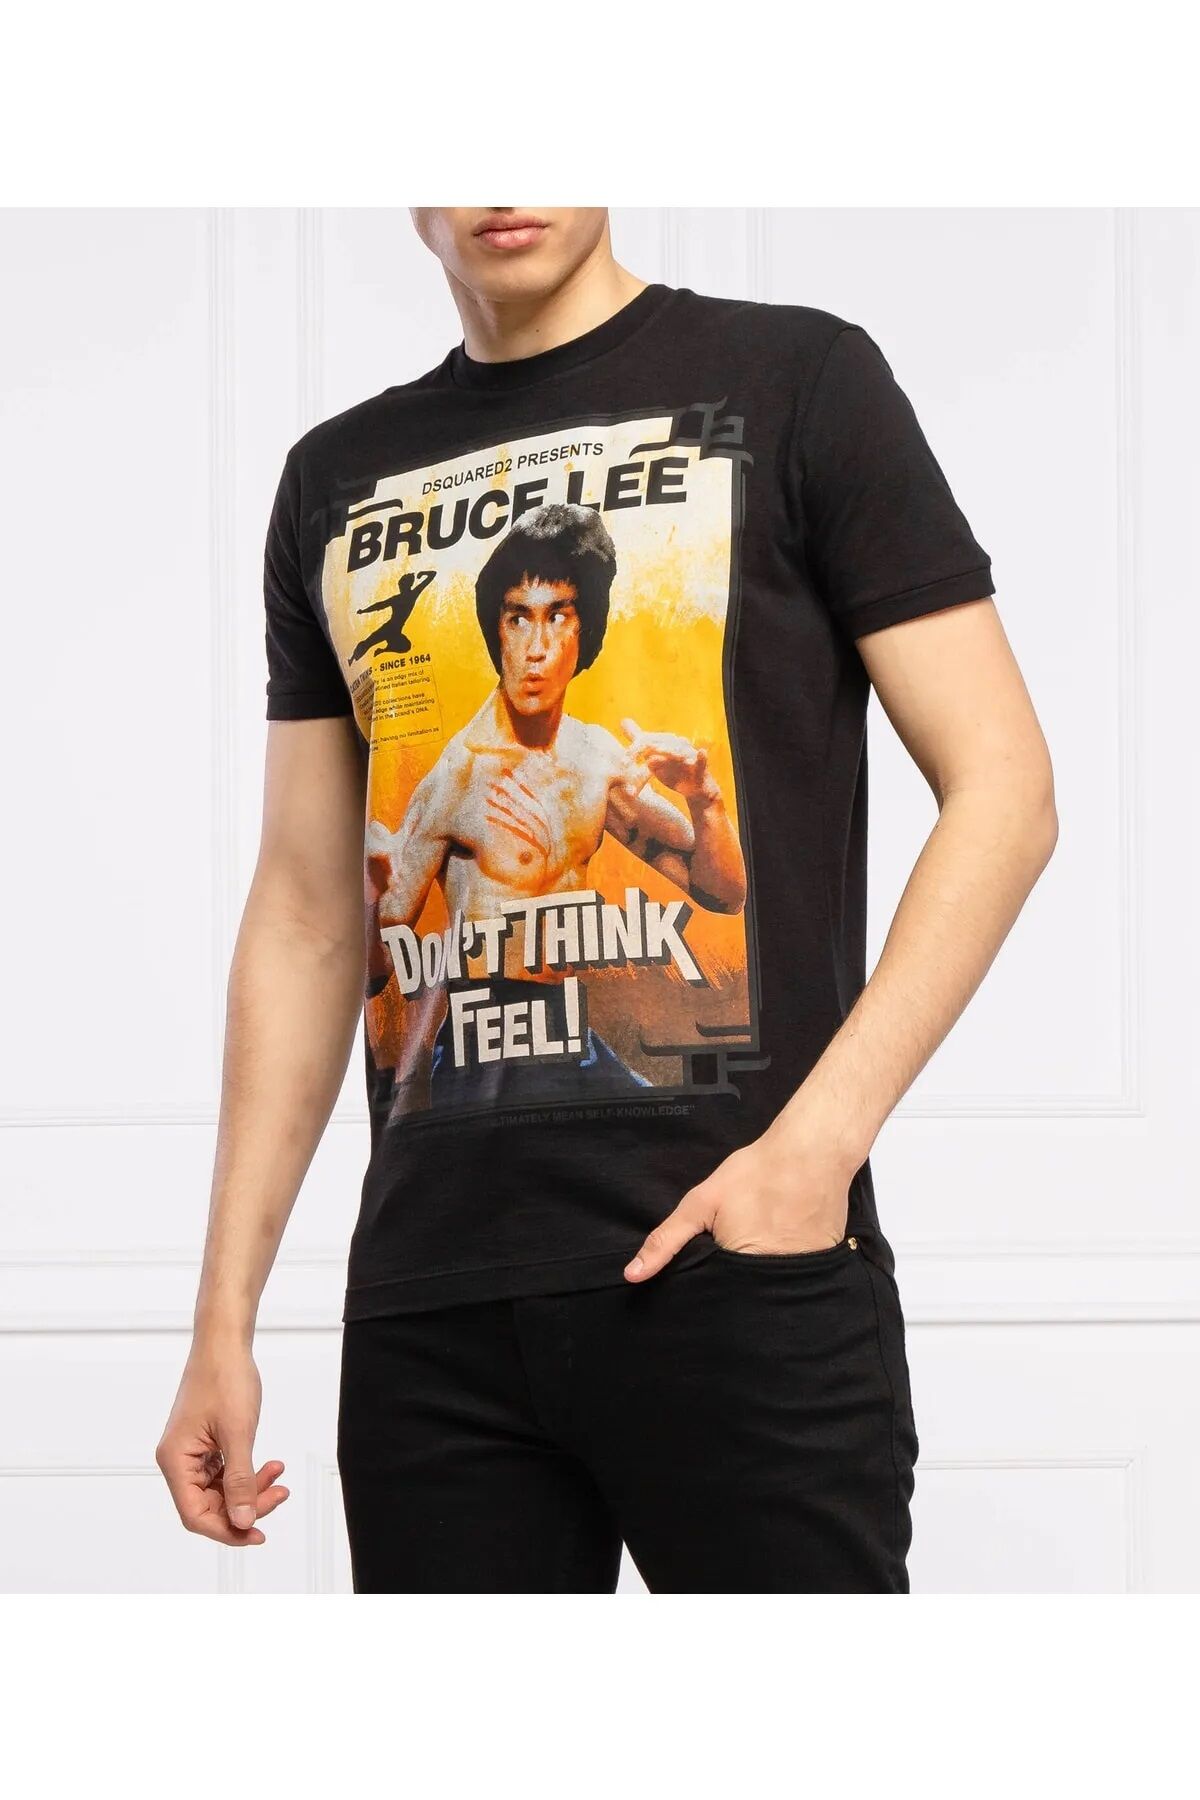 Bruce Lee Fear T-shirt